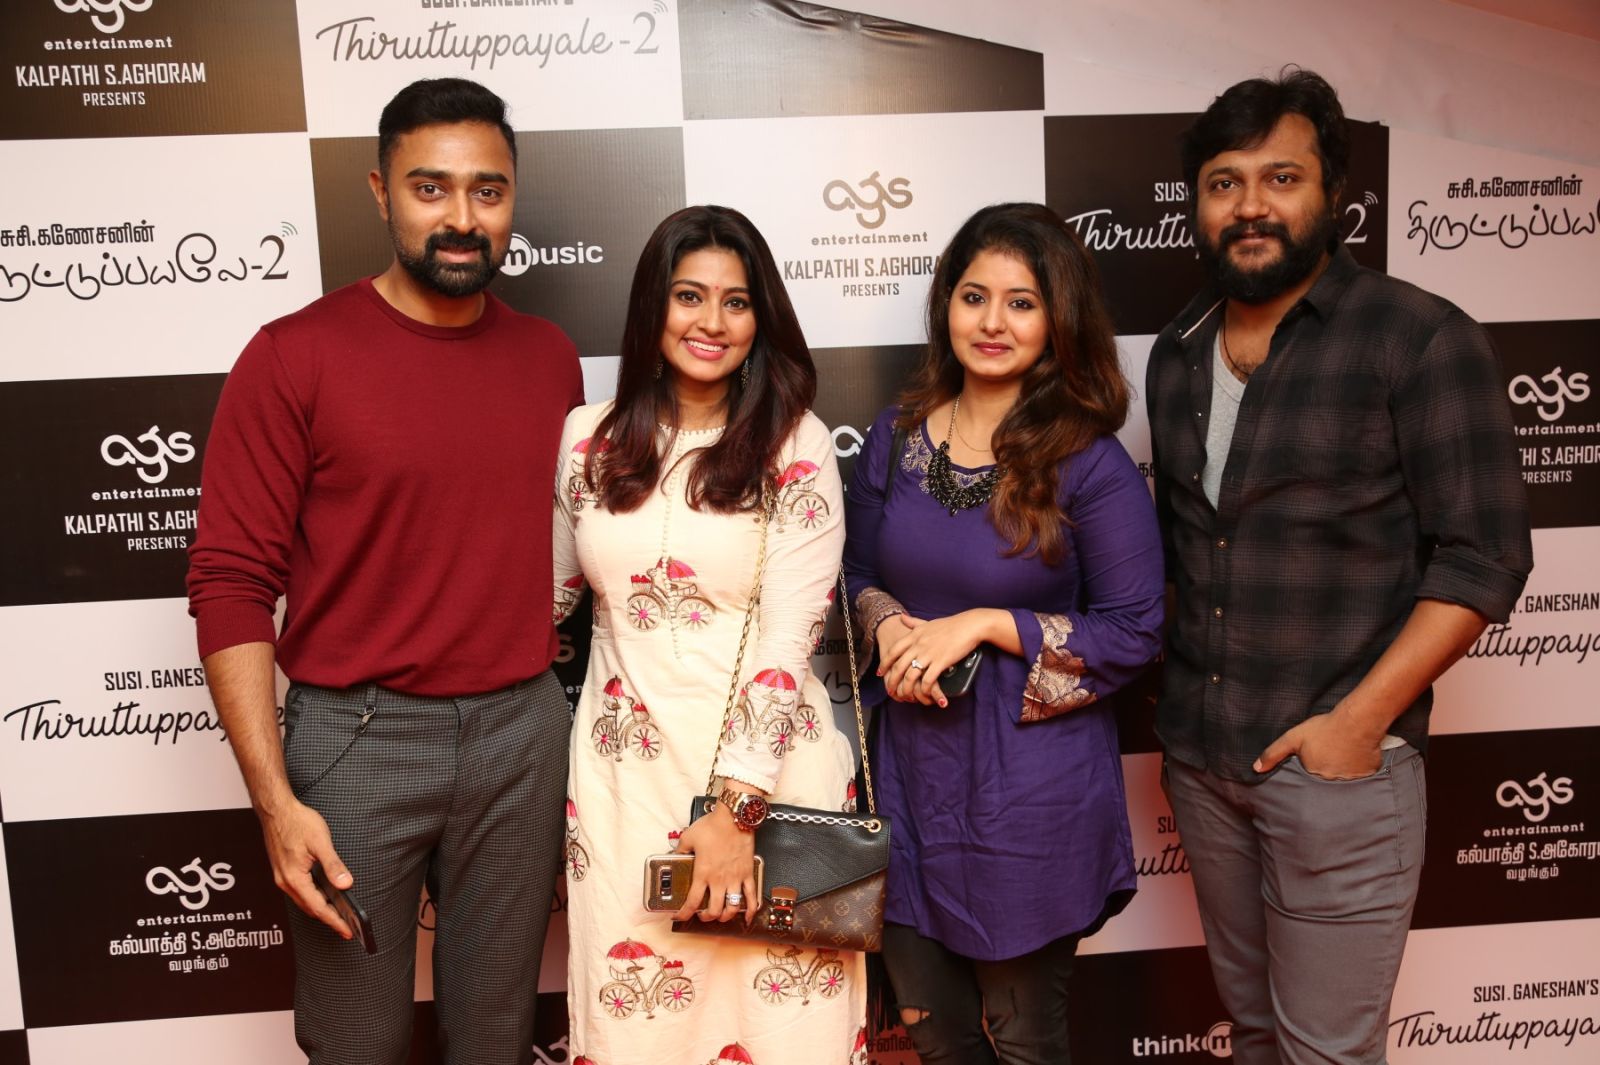 Thiruttuppayale 2 Red Carpet Premiere Show Stills (18)